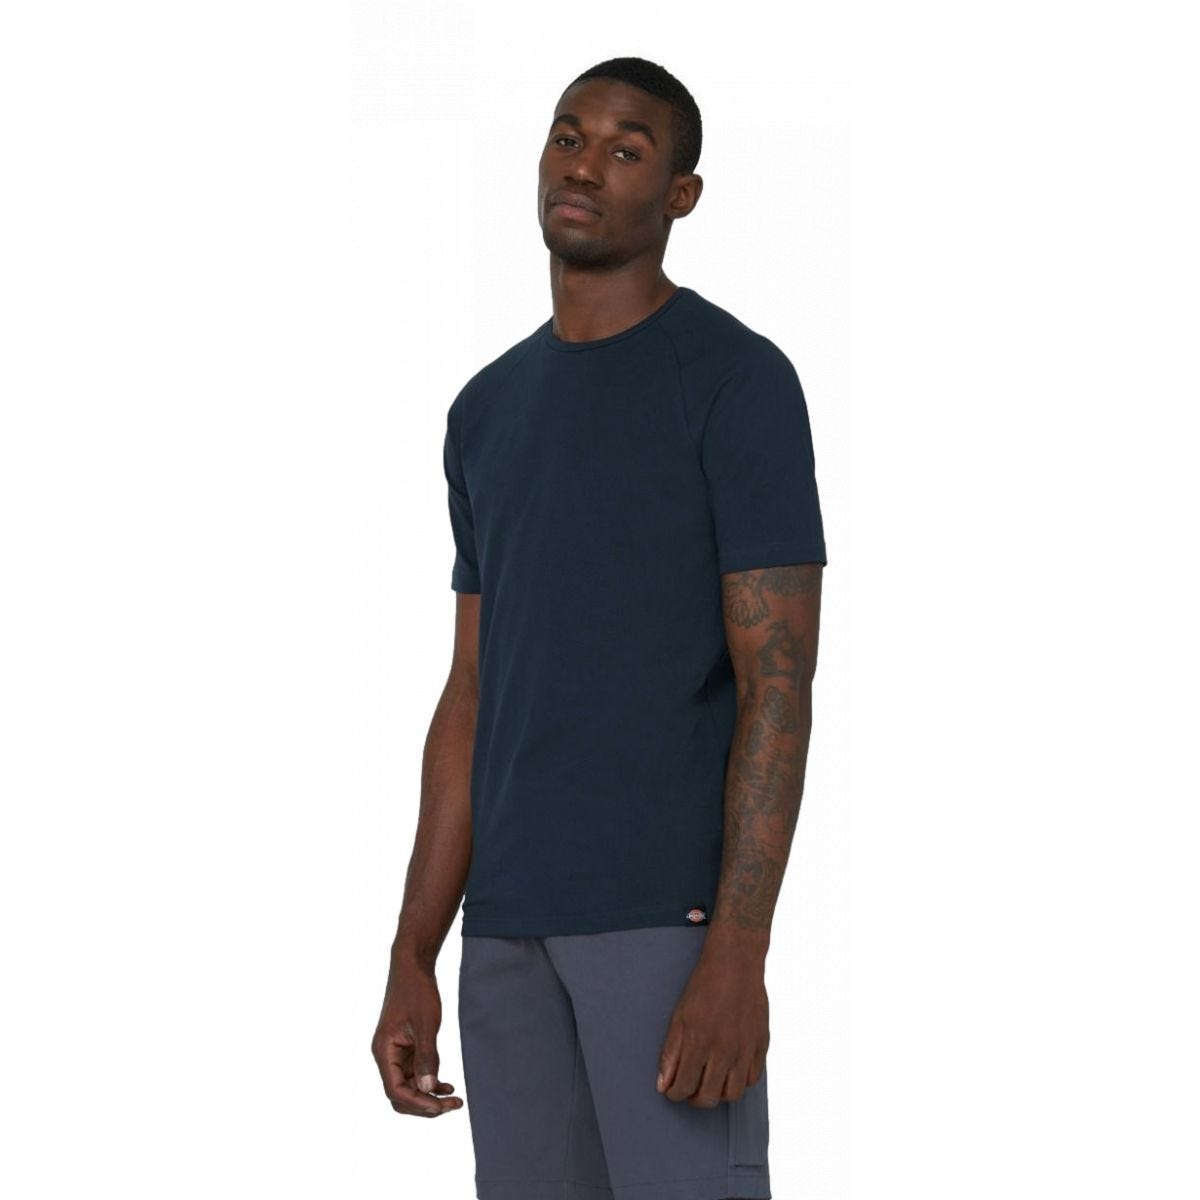 Tee-shirt Temp-IQ Bleu marine - Dickies - Taille M 2